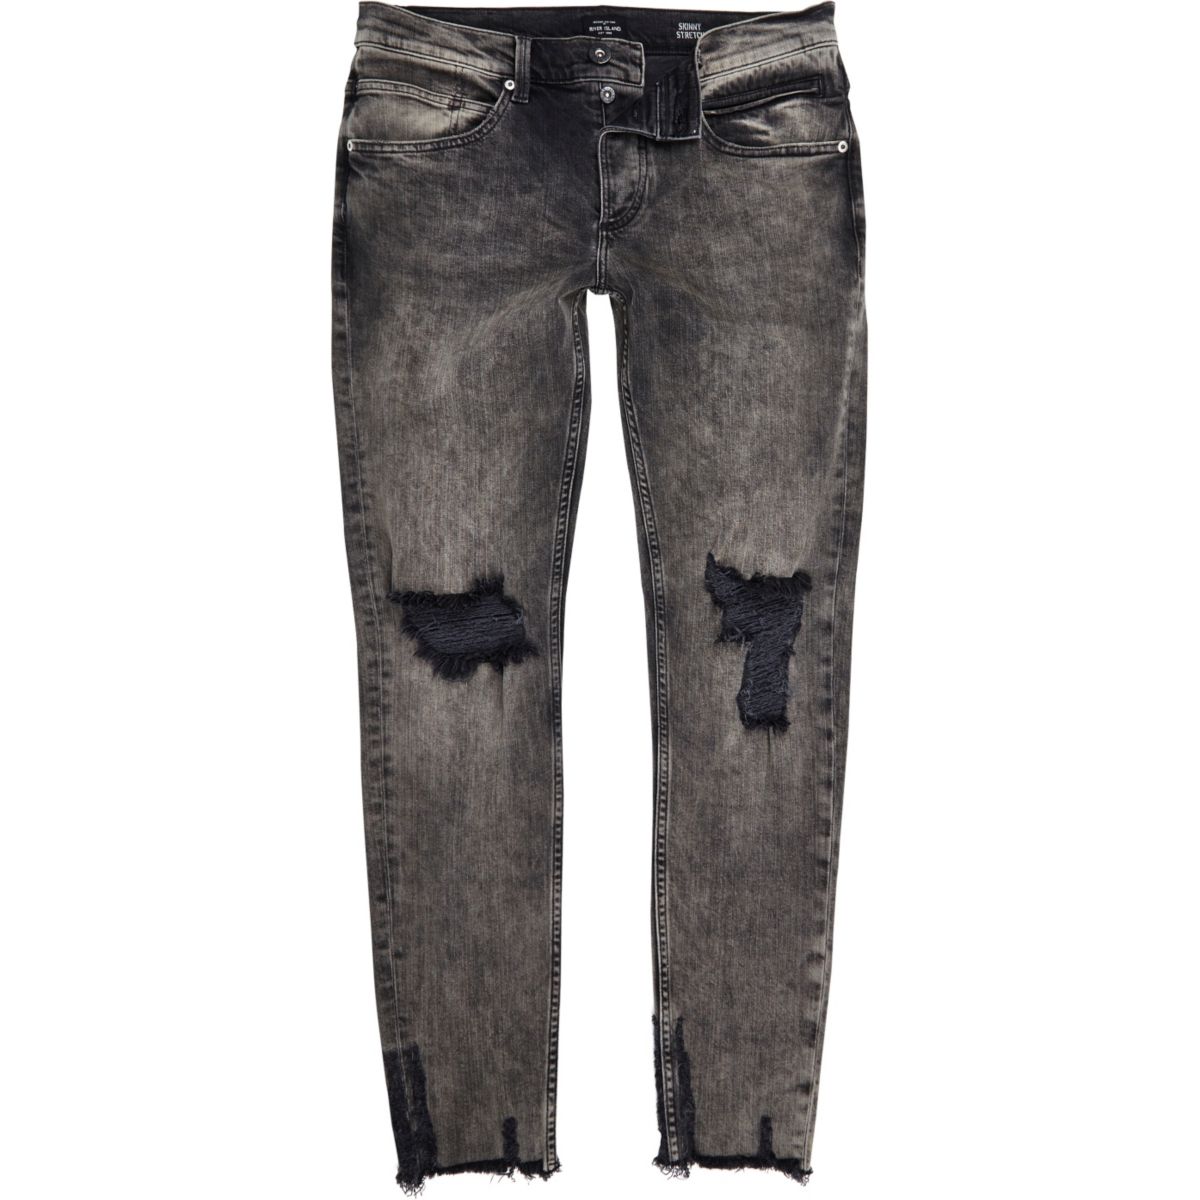 Black faded raw hem Sid skinny jeans - Jeans - Sale - men